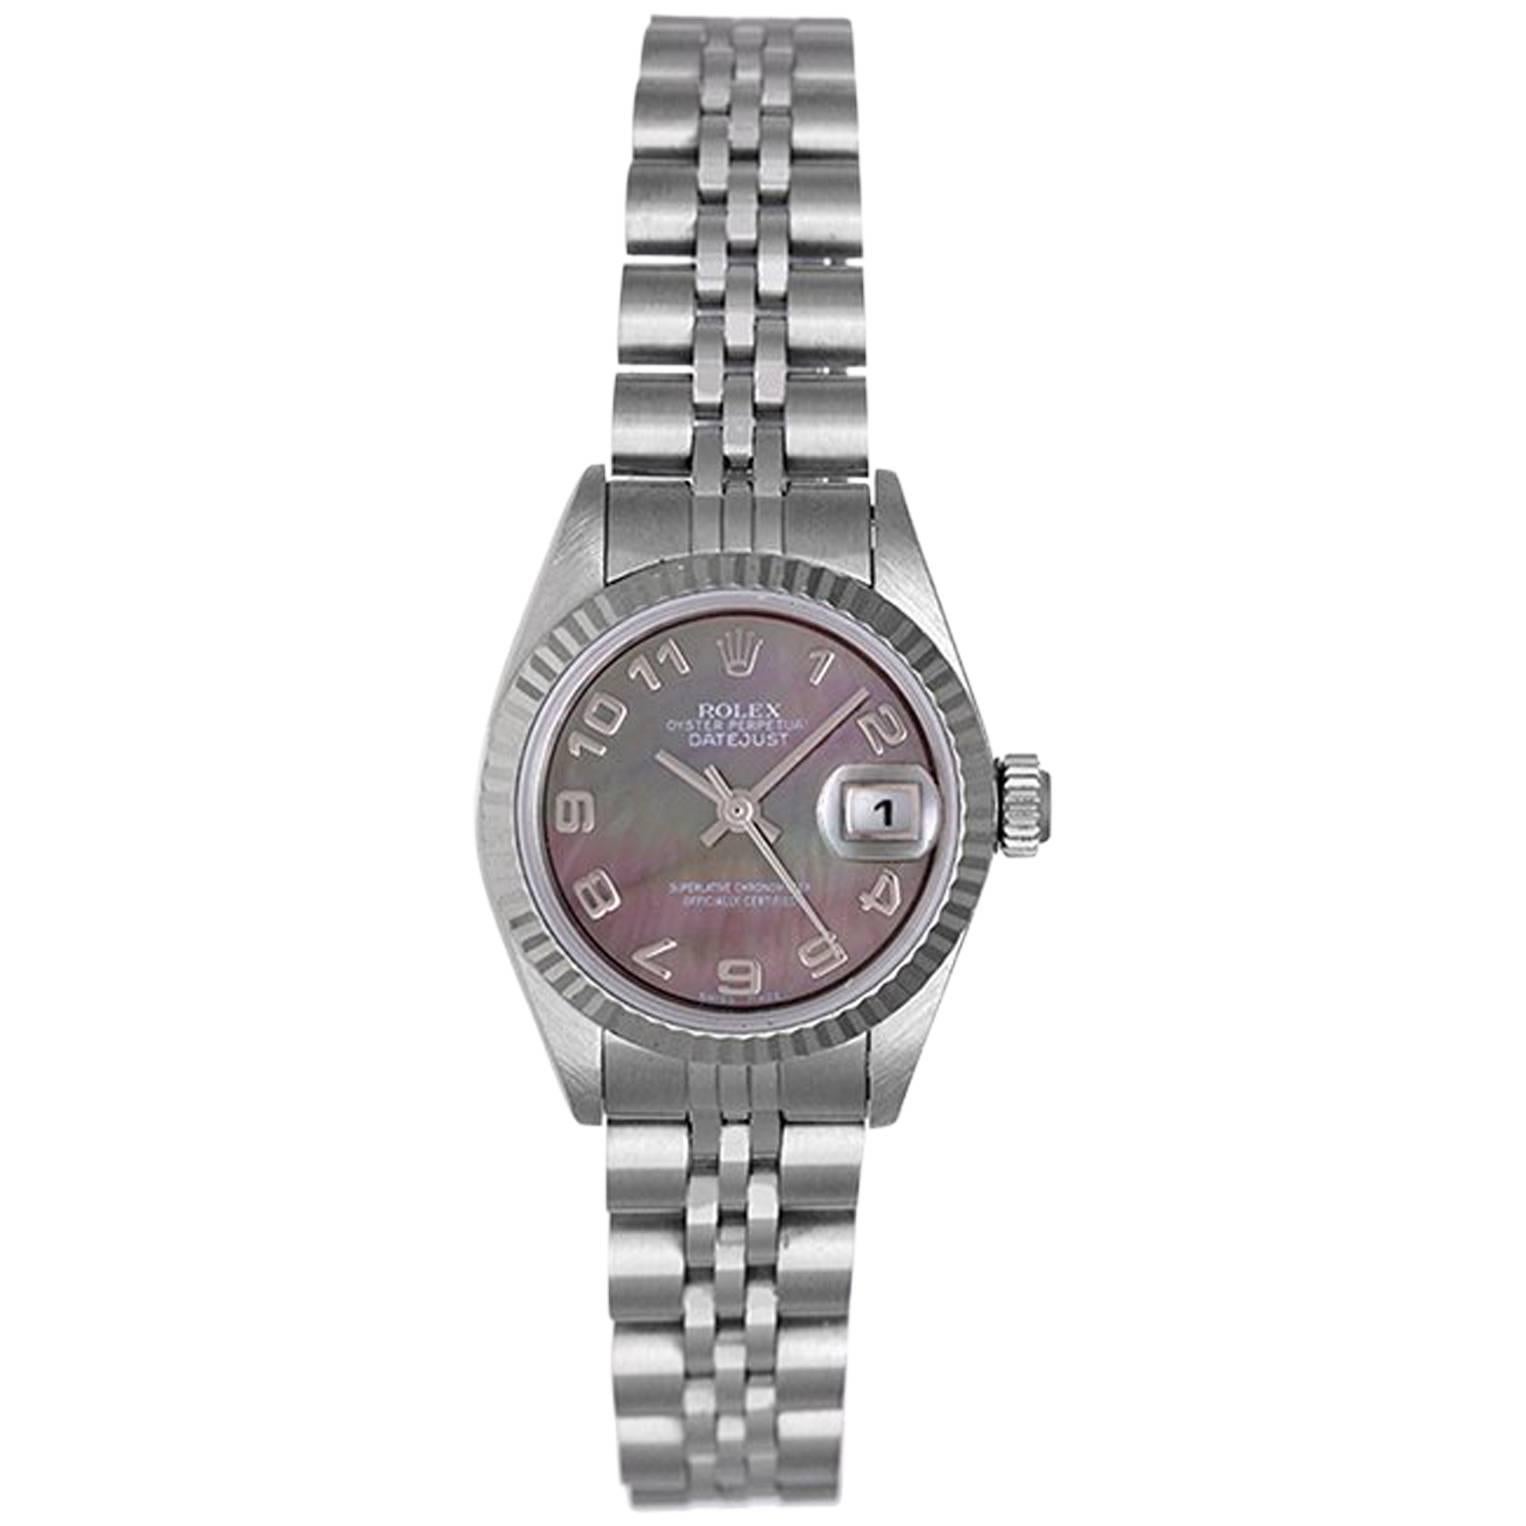 Rolex Ladies Stainless Steel Datejust Automatic Wristwatch Ref 179174